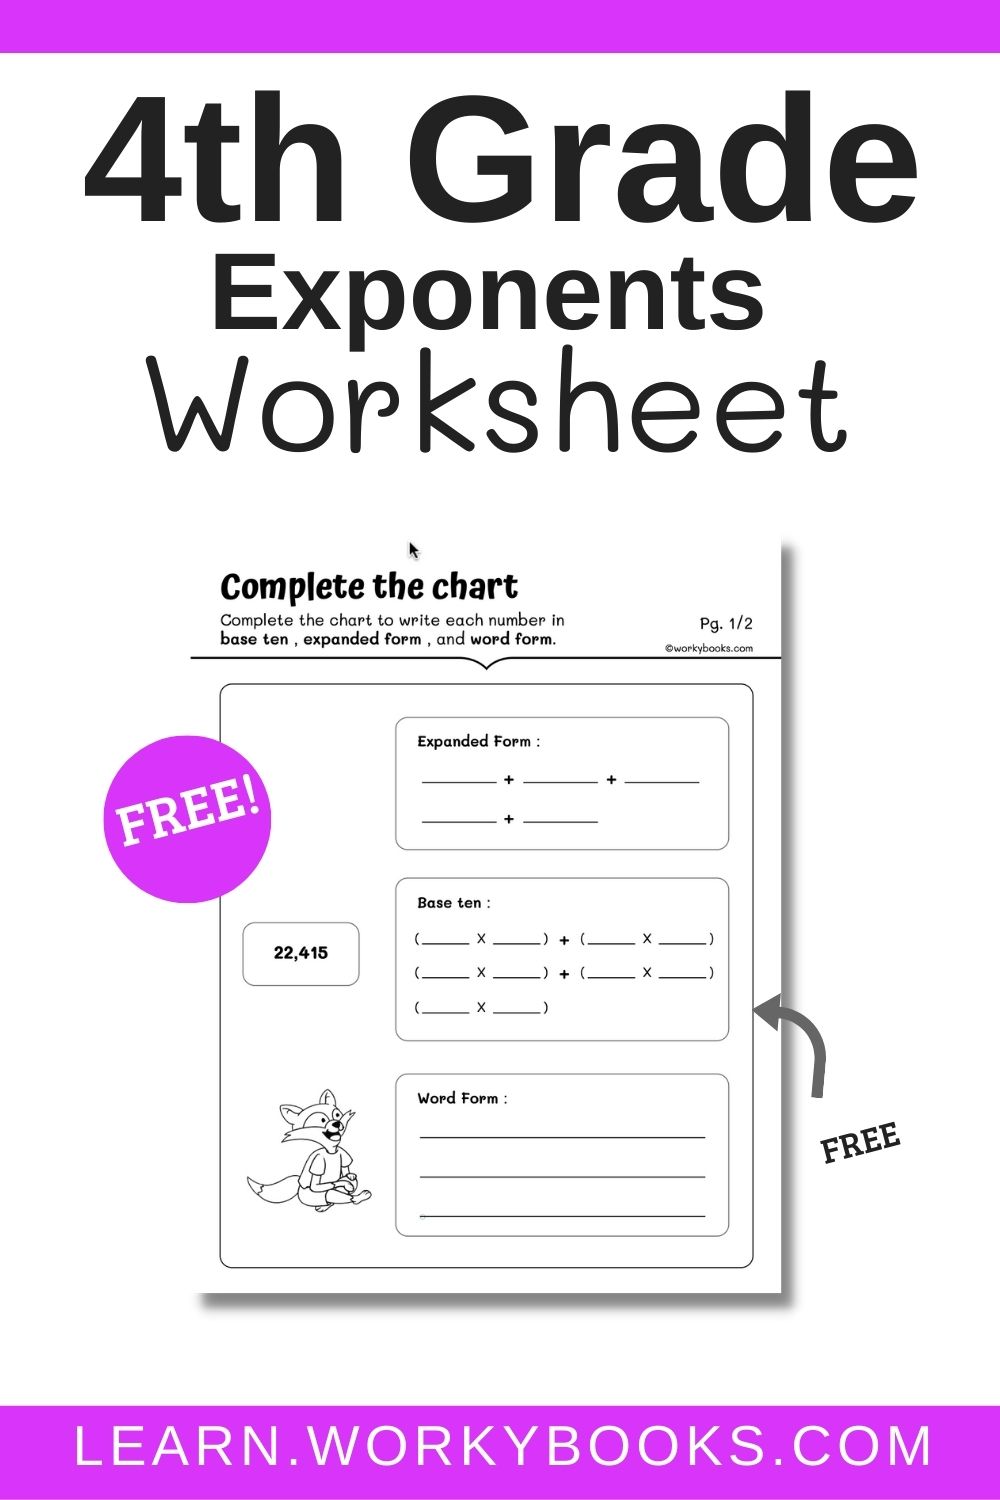 4th grade exponents worksheet